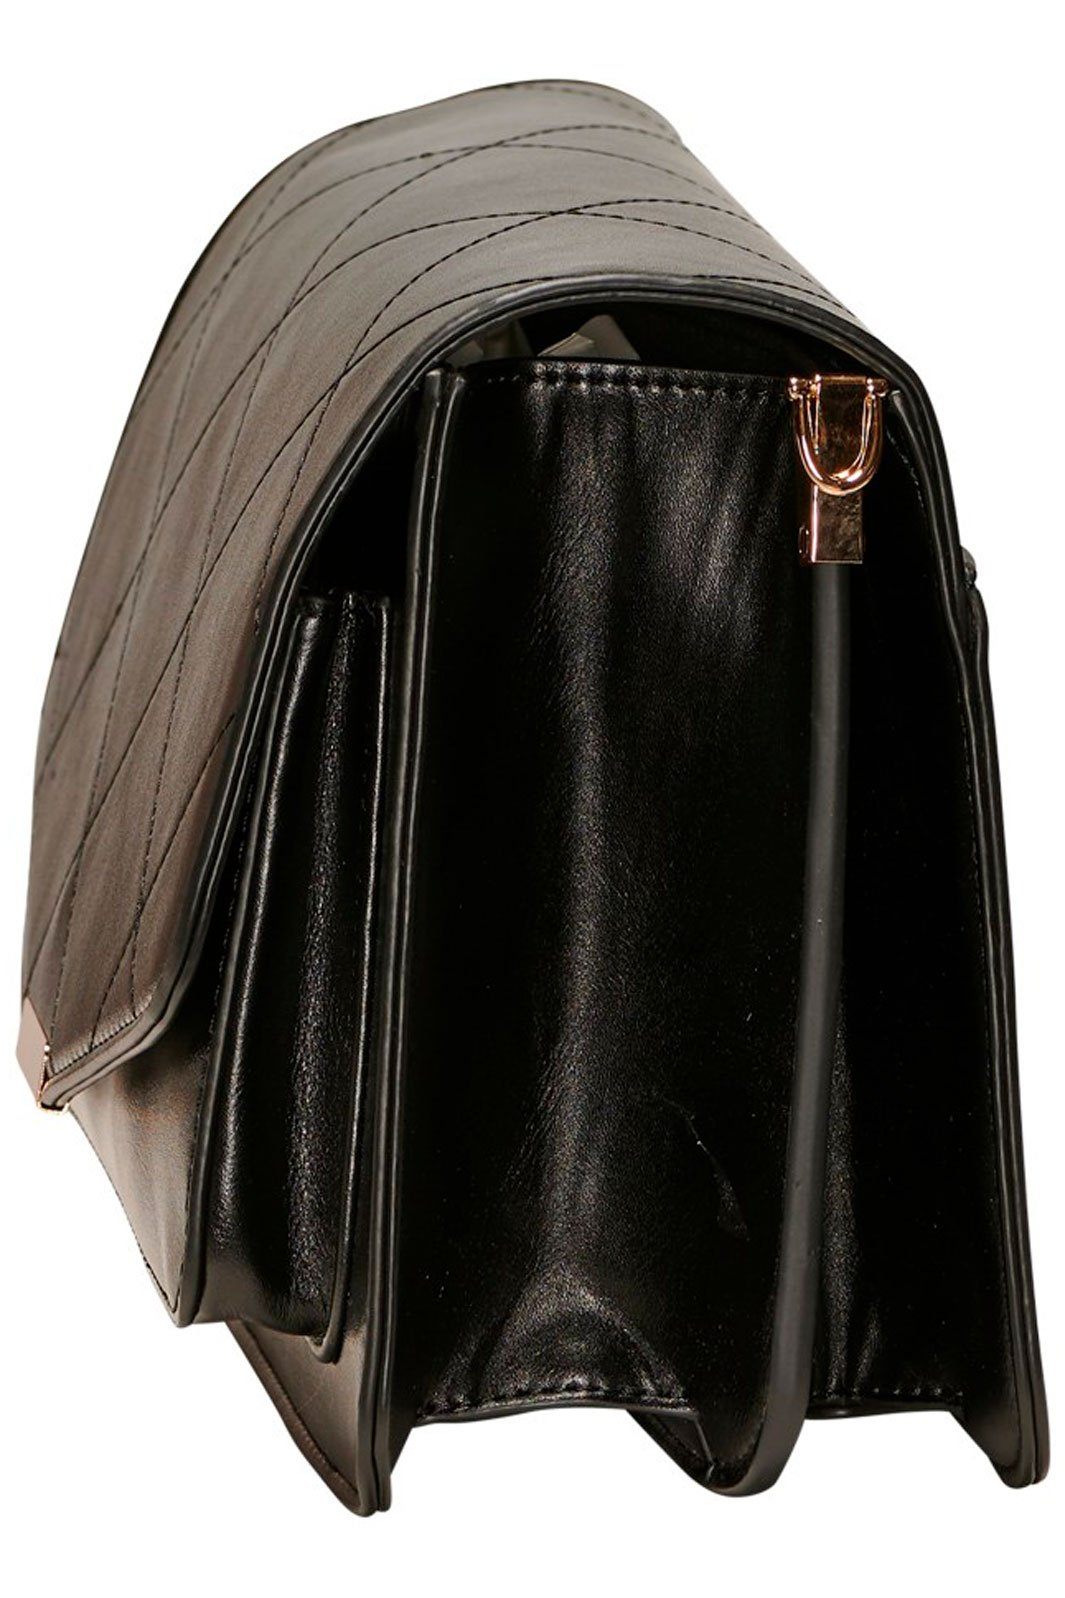 Noella - Blanca Multi Compartment Bag - Black Leather Look Tasker 